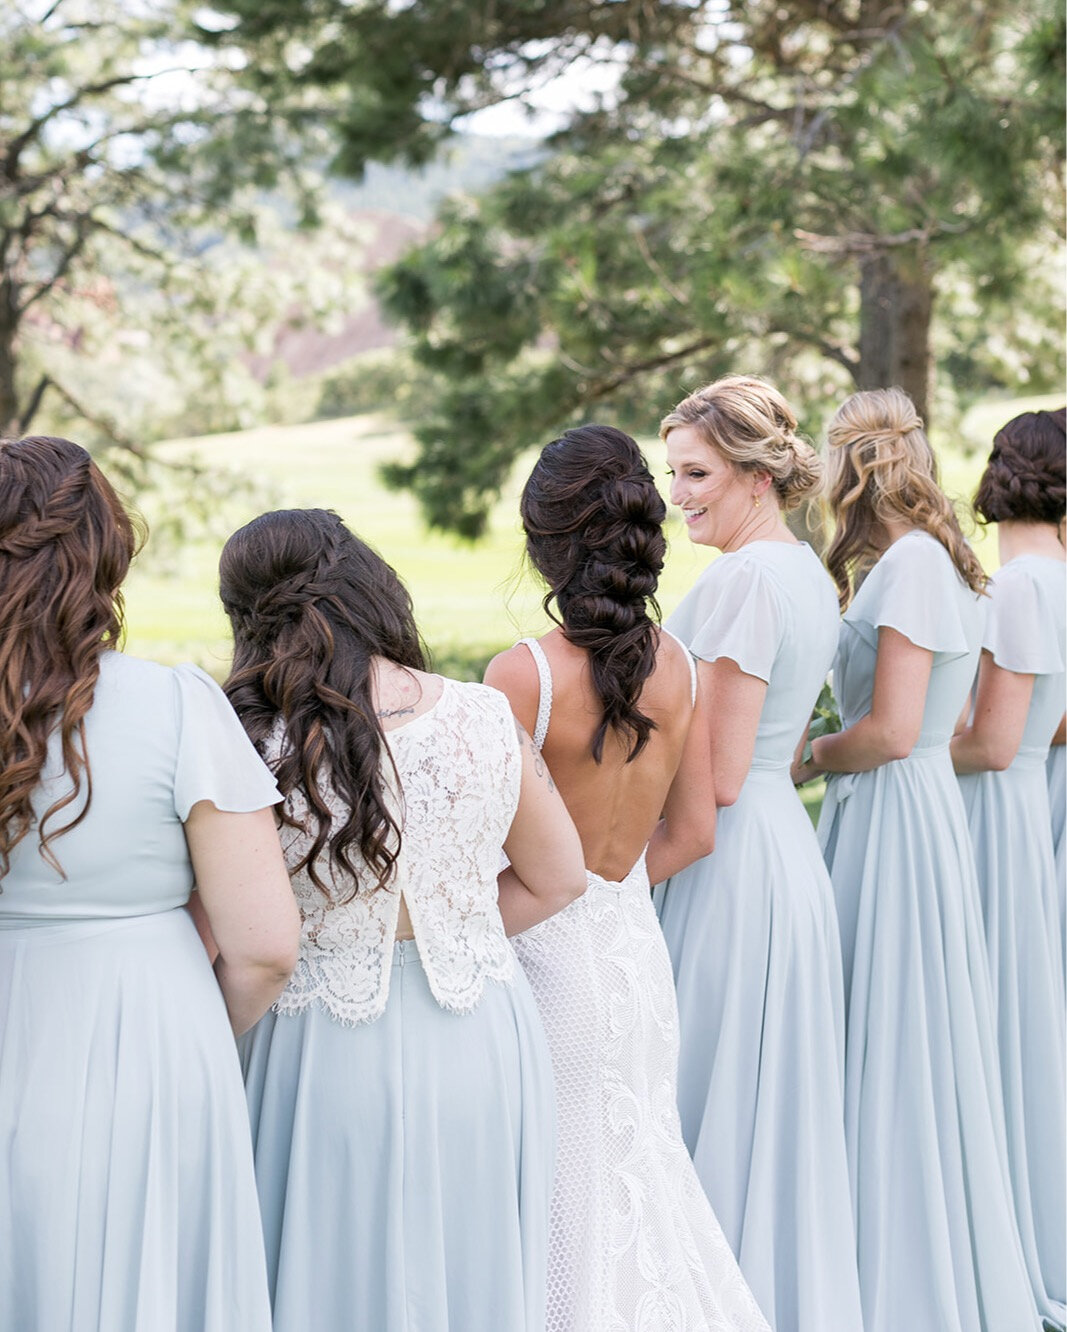 Get yourself a glam squad that treats you like your bridal squad.​​​​​​​​
.​​​​​​​​
.​​​​​​​​
.​​​​​​​​
.​​​​​​​​
Photographer:  @amycarolinephotography